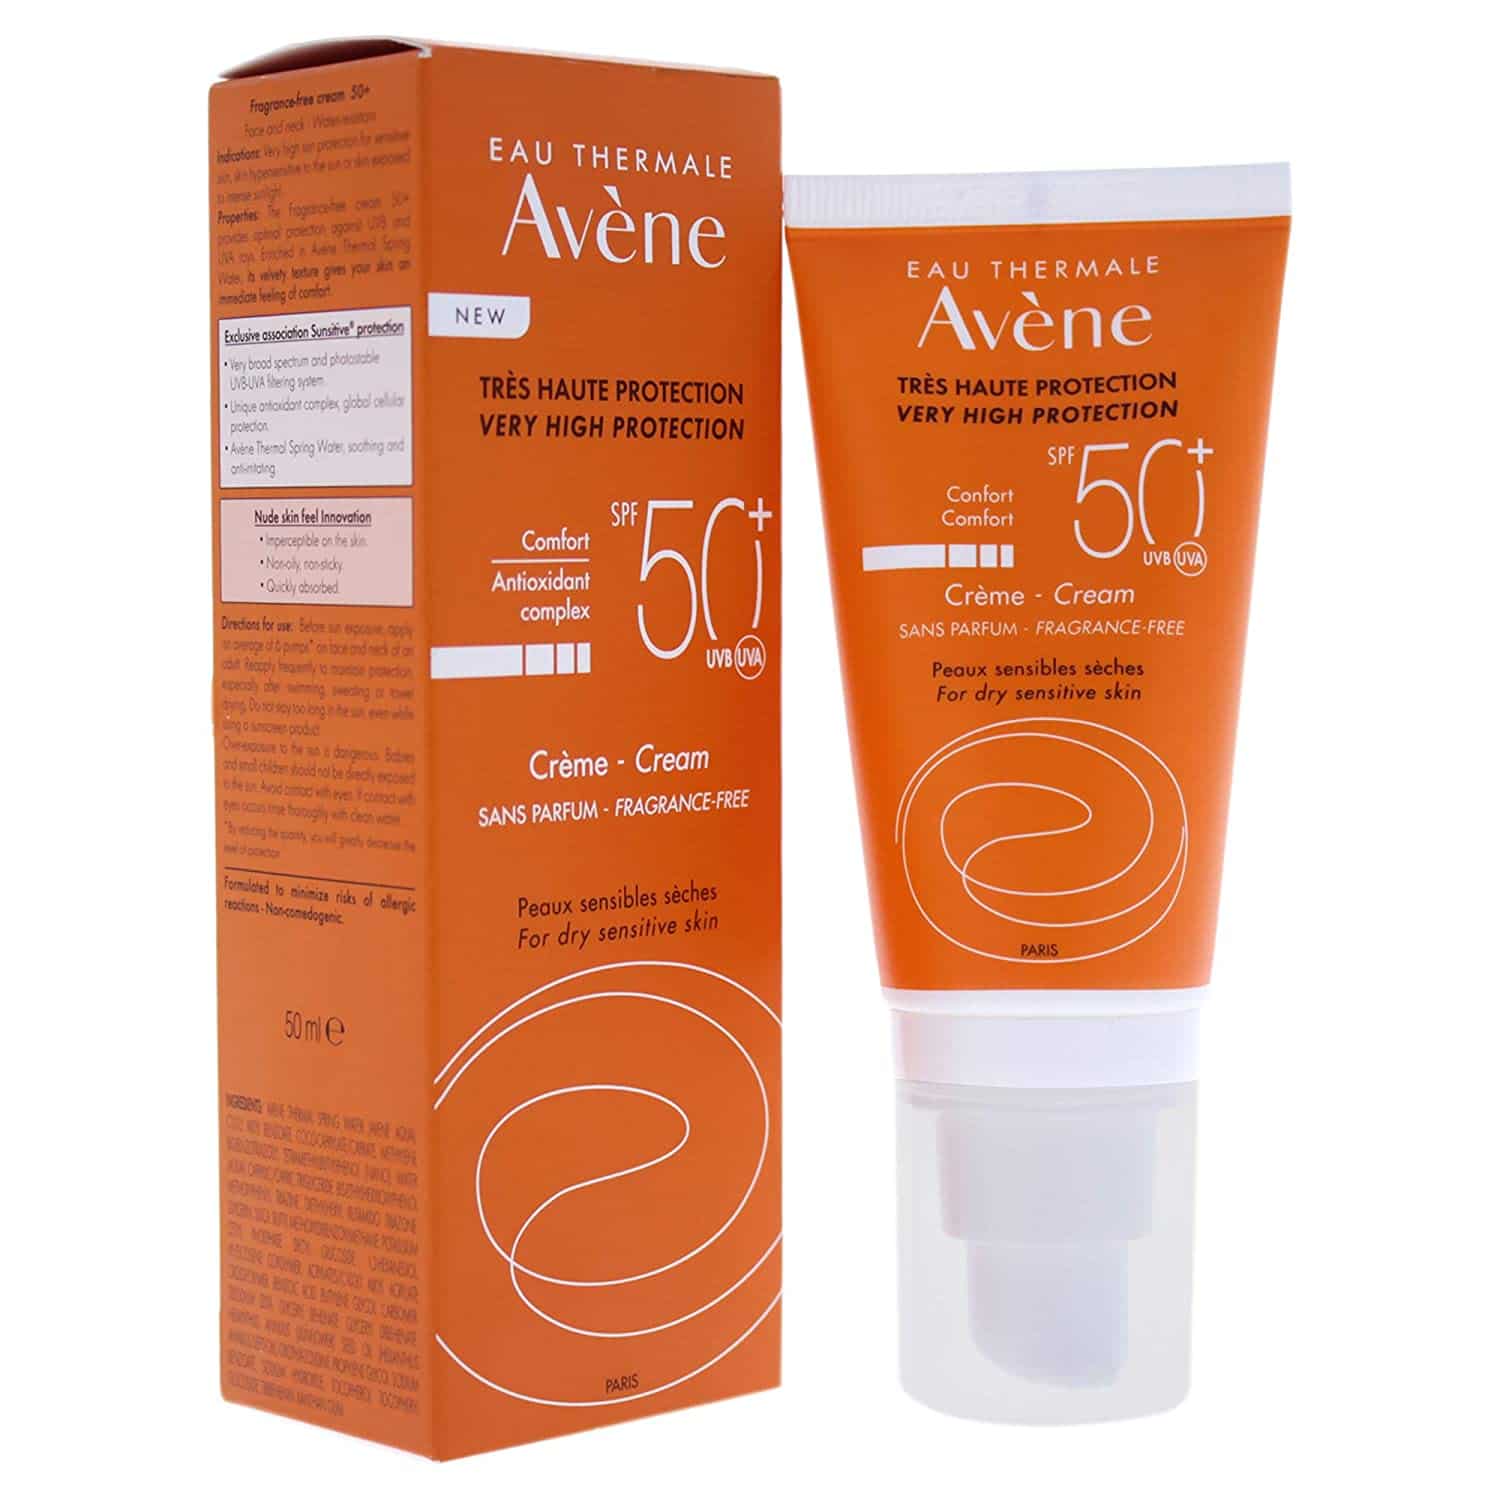 Avene Crème SPF 50+ best sunscreen